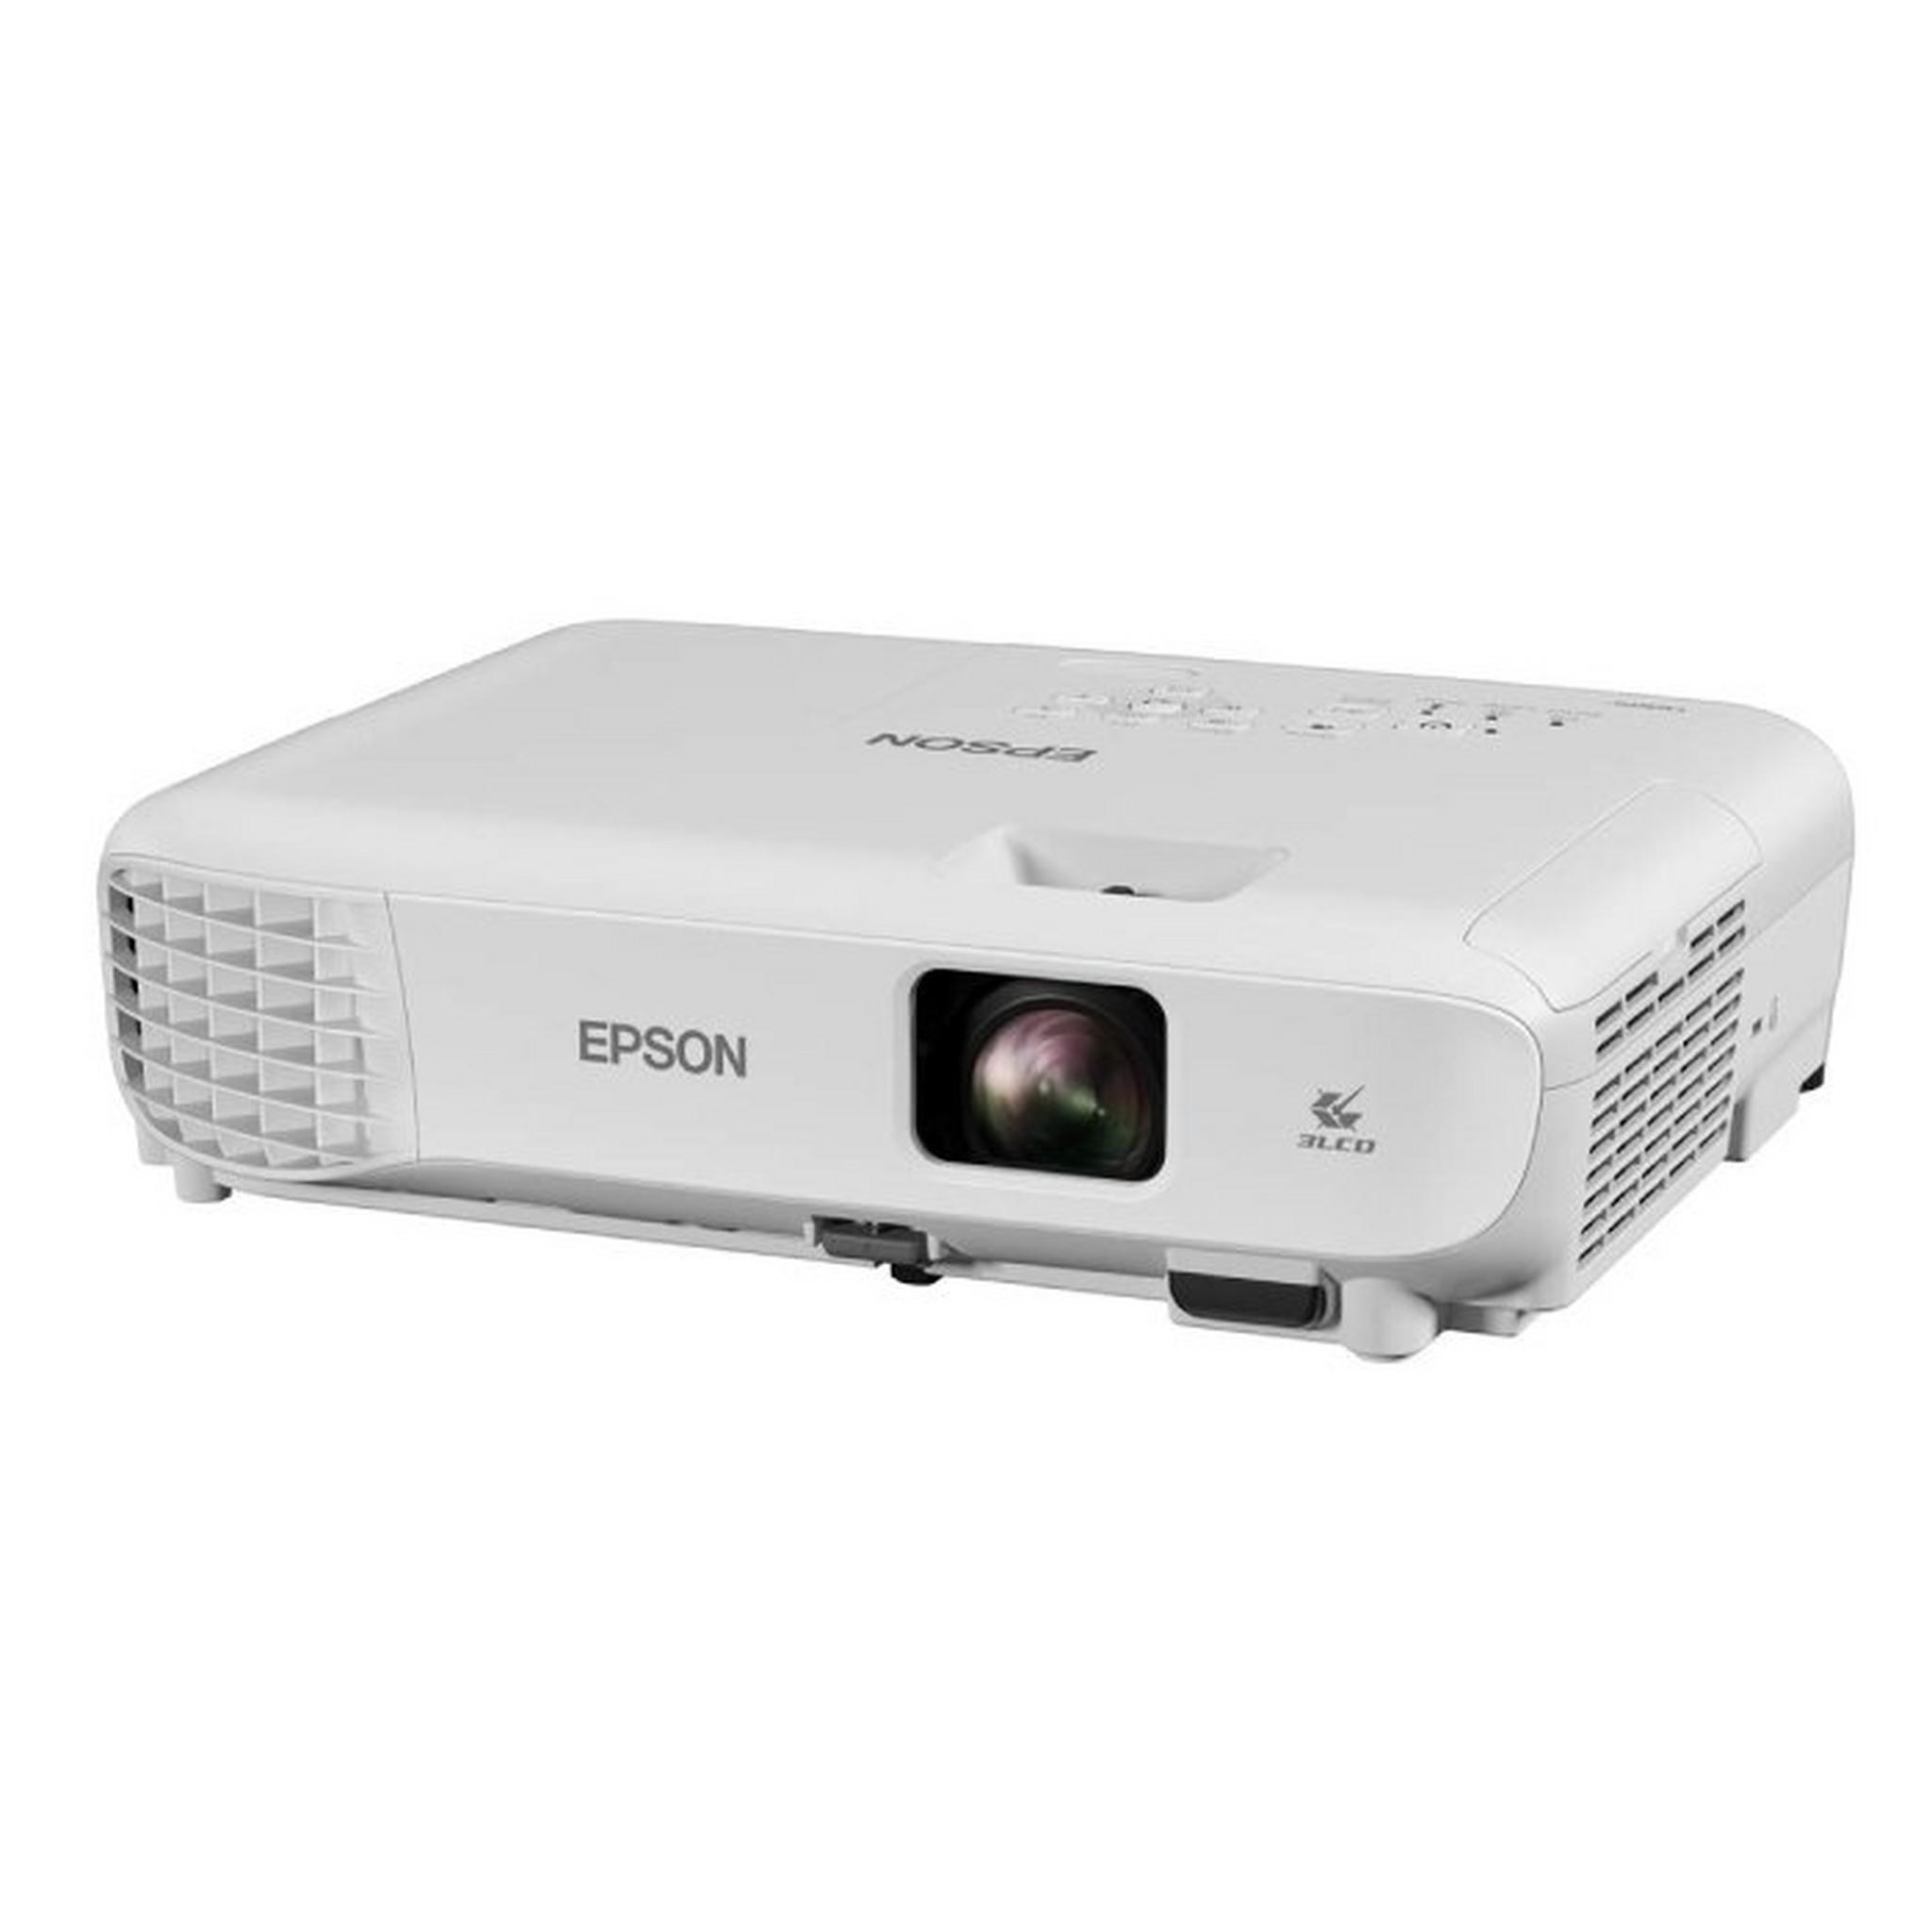 Epson XGA (1024x768) 3600 Lumens Projector (EB-X06)